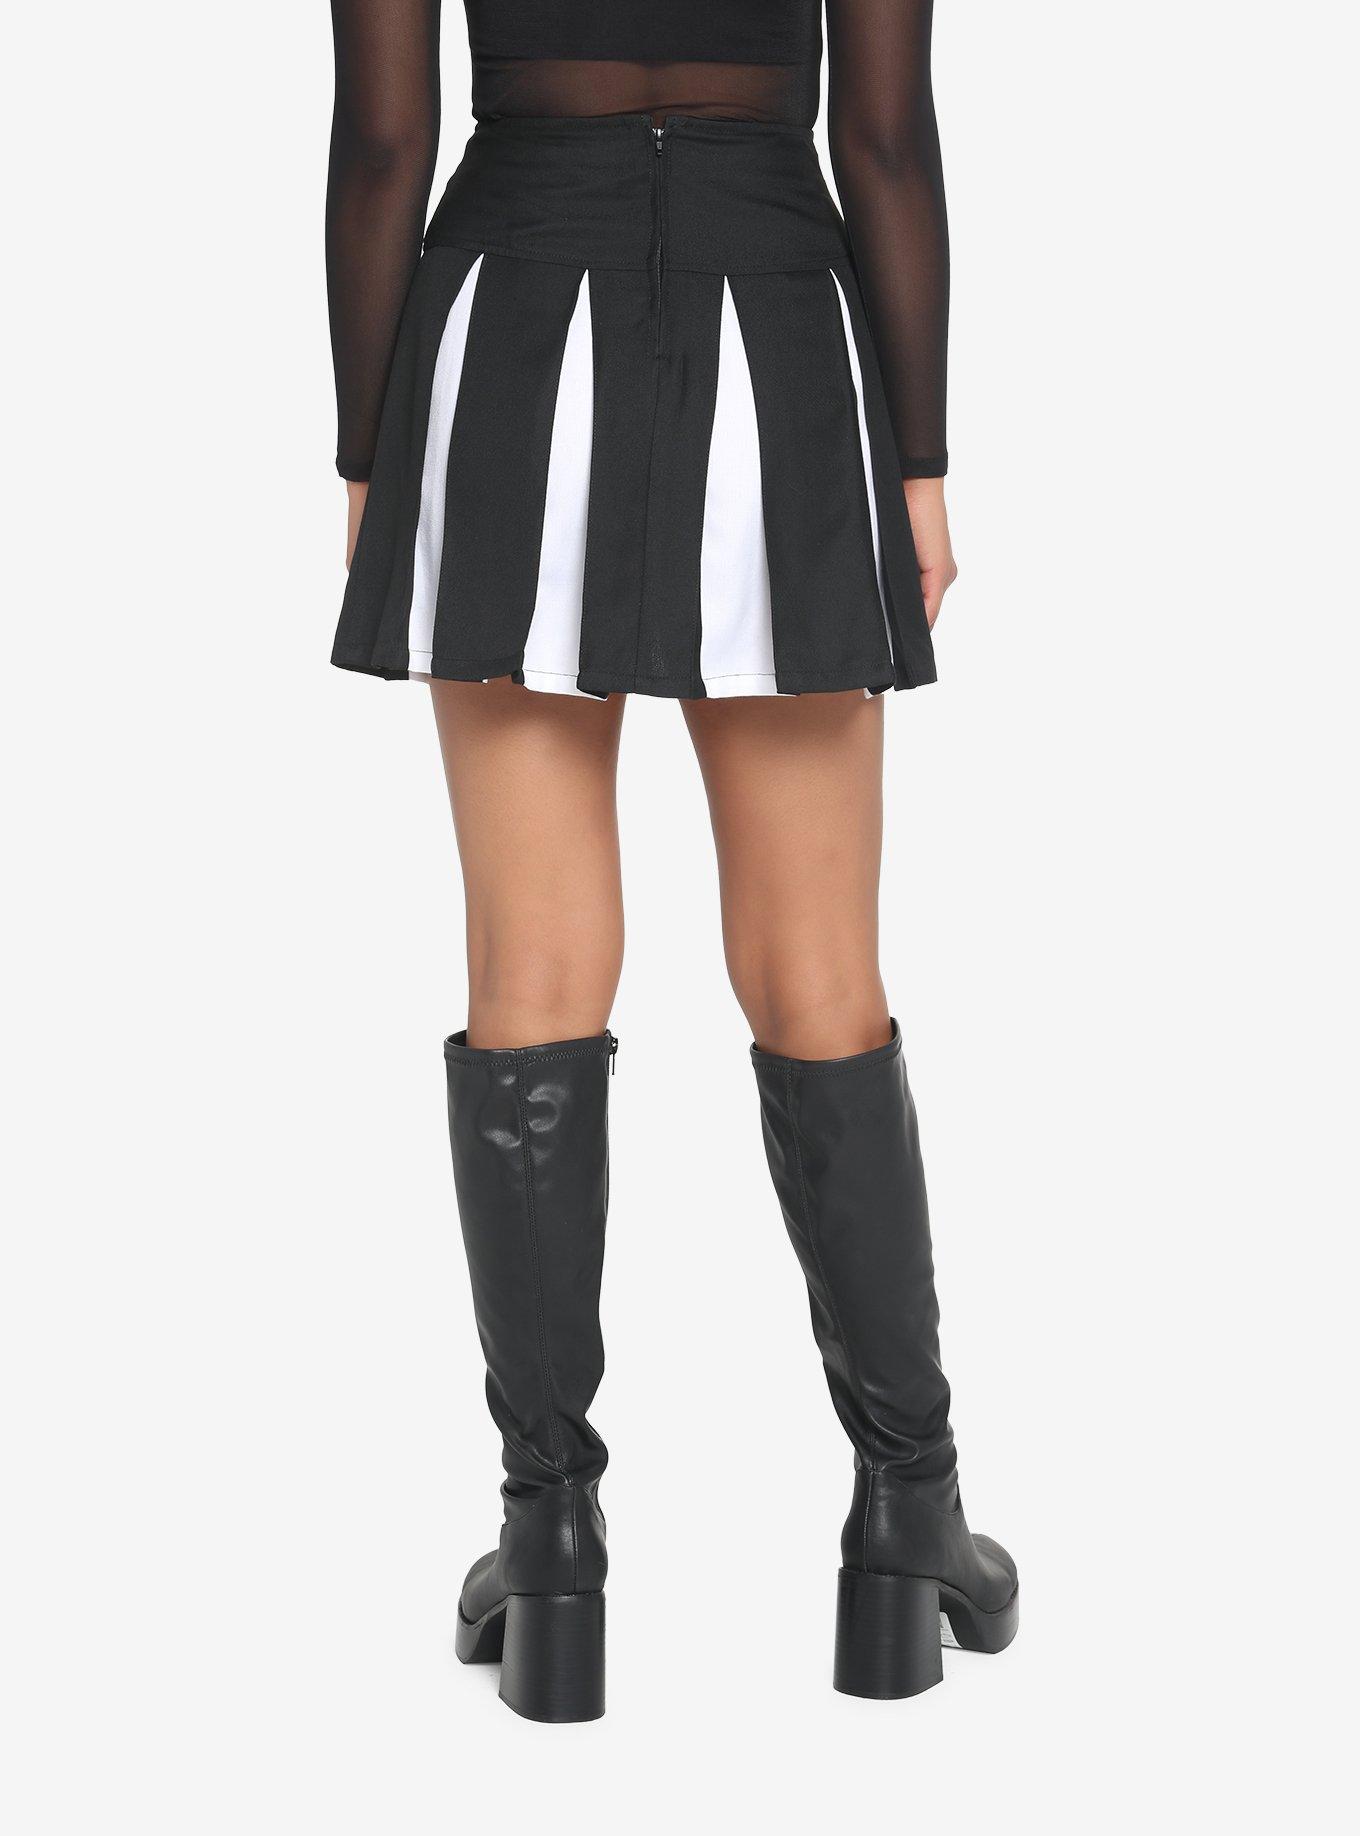 Black & White Contrast Pleated Lace-Up Skirt, BLACK, alternate